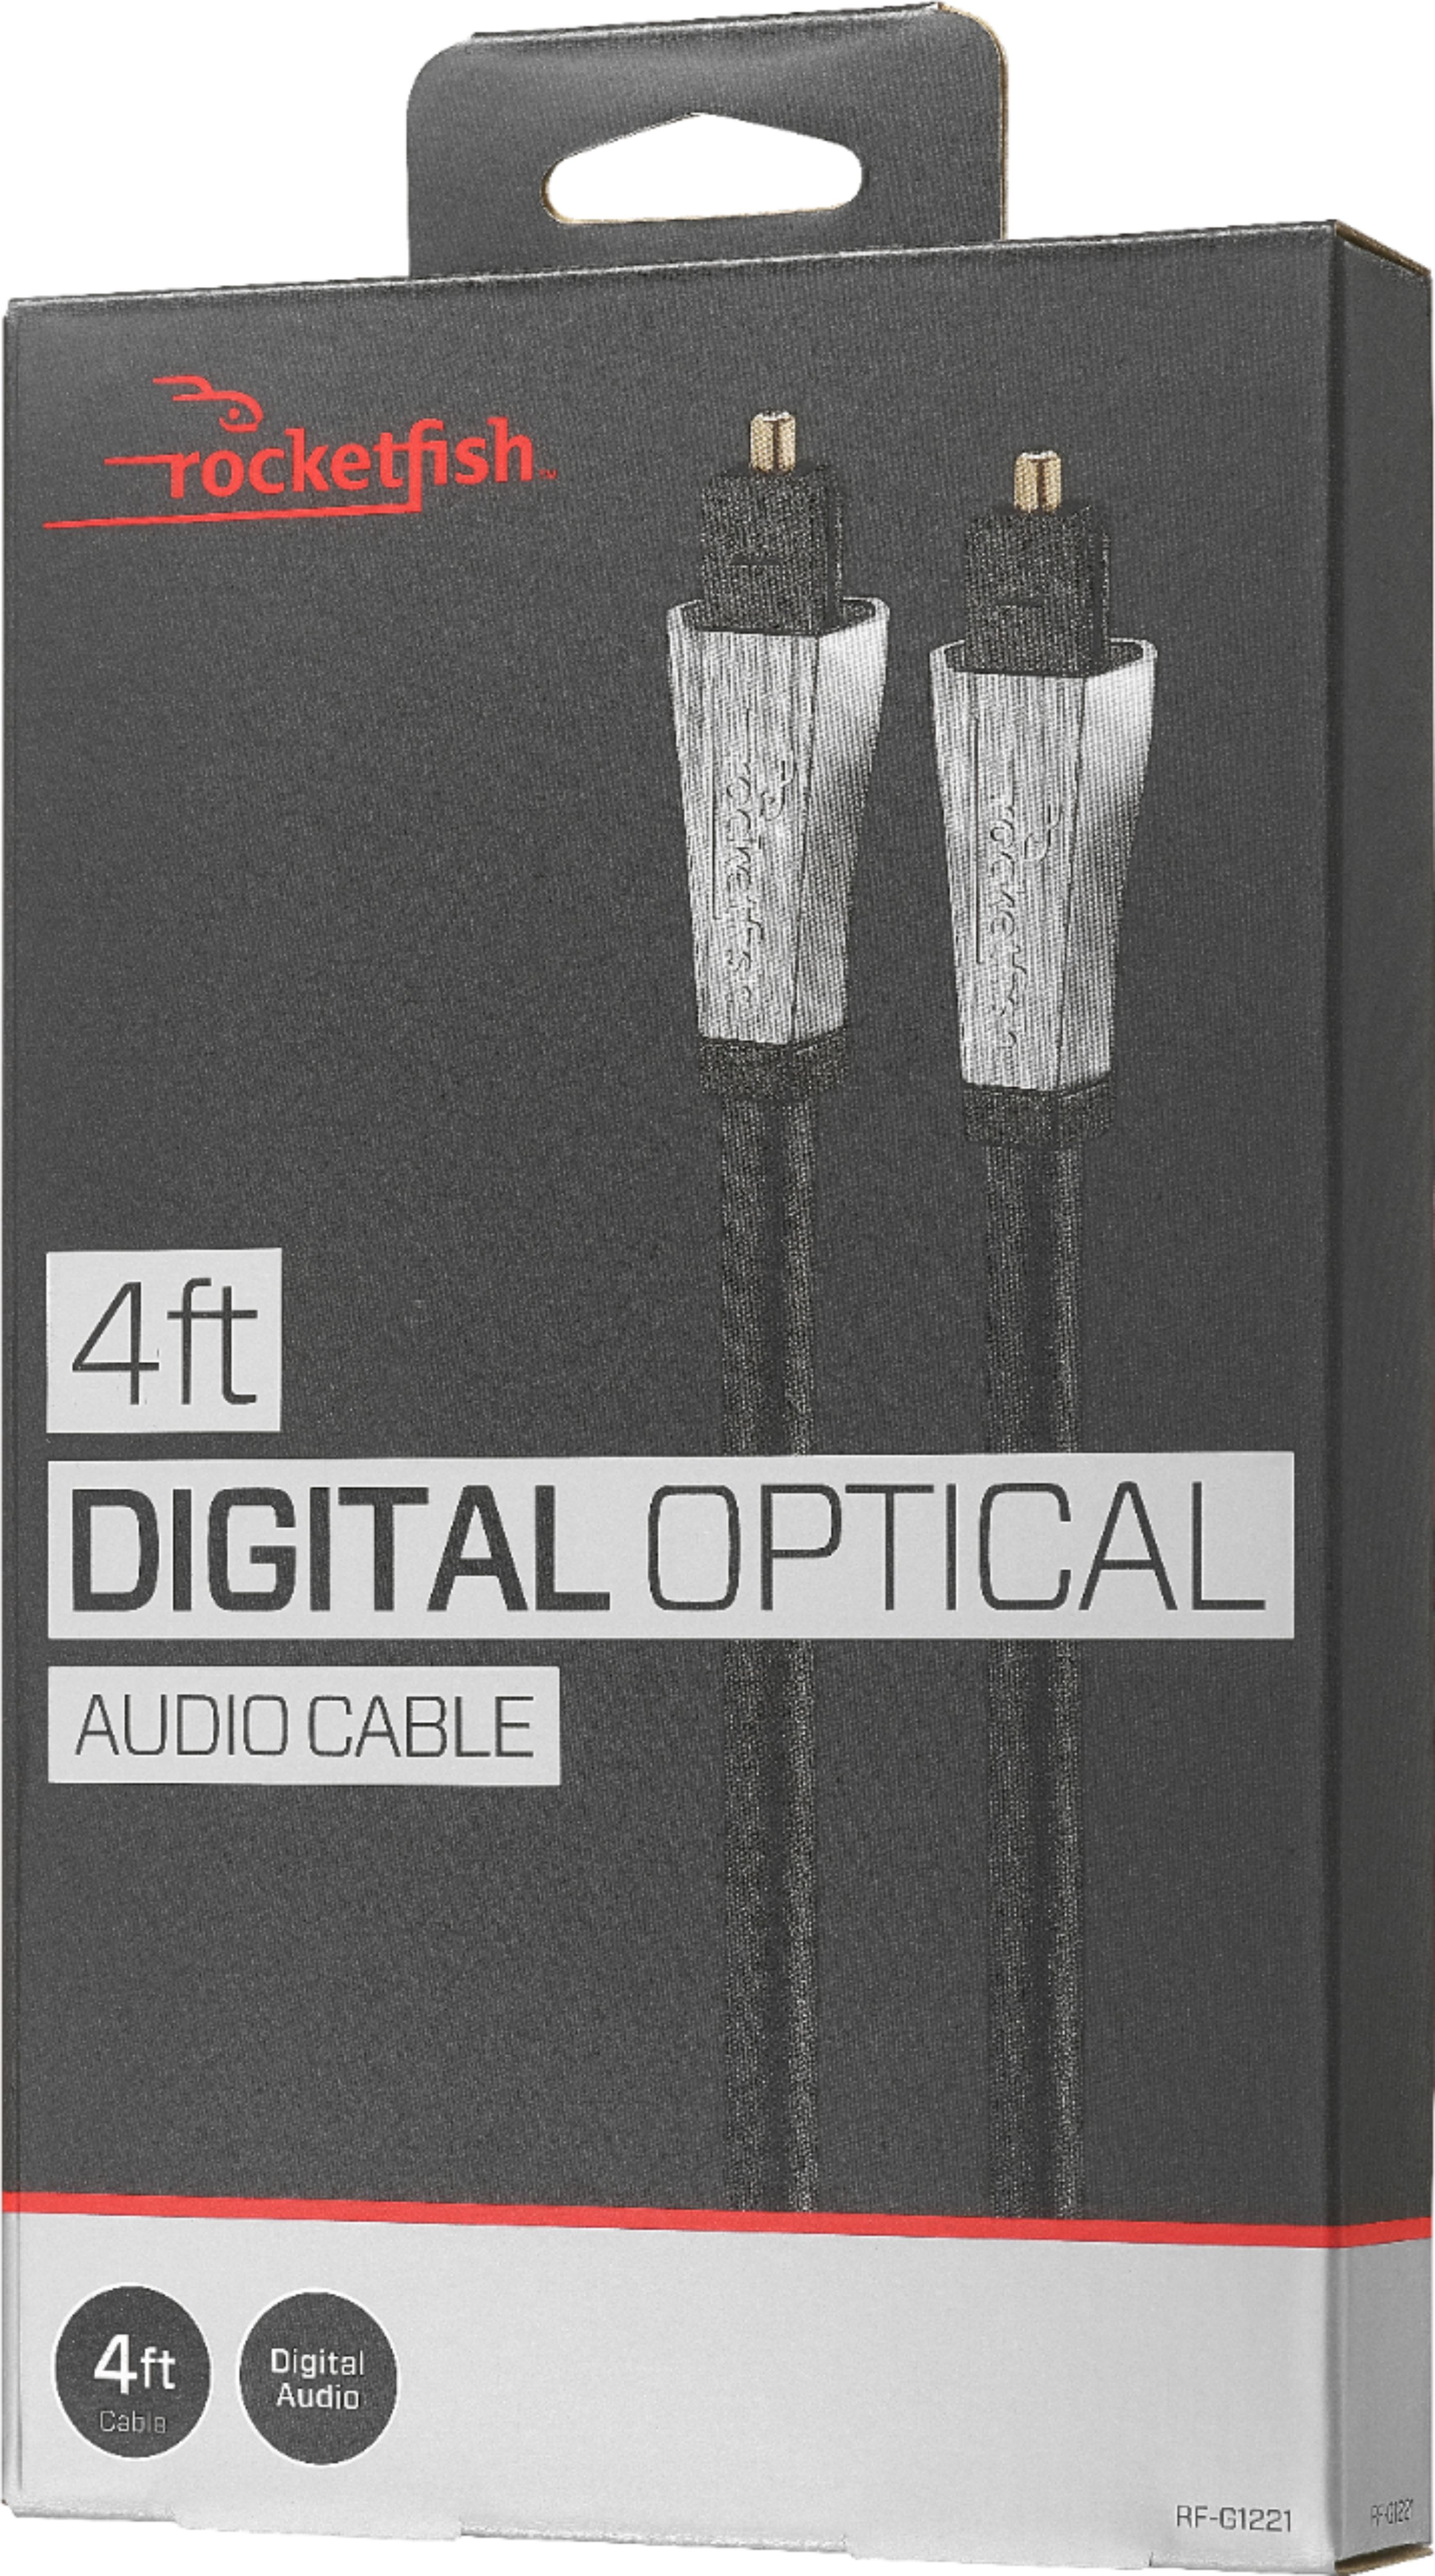 Open Box RF-G1218 Rocketfish Digital Optical Audio Cable 4' 